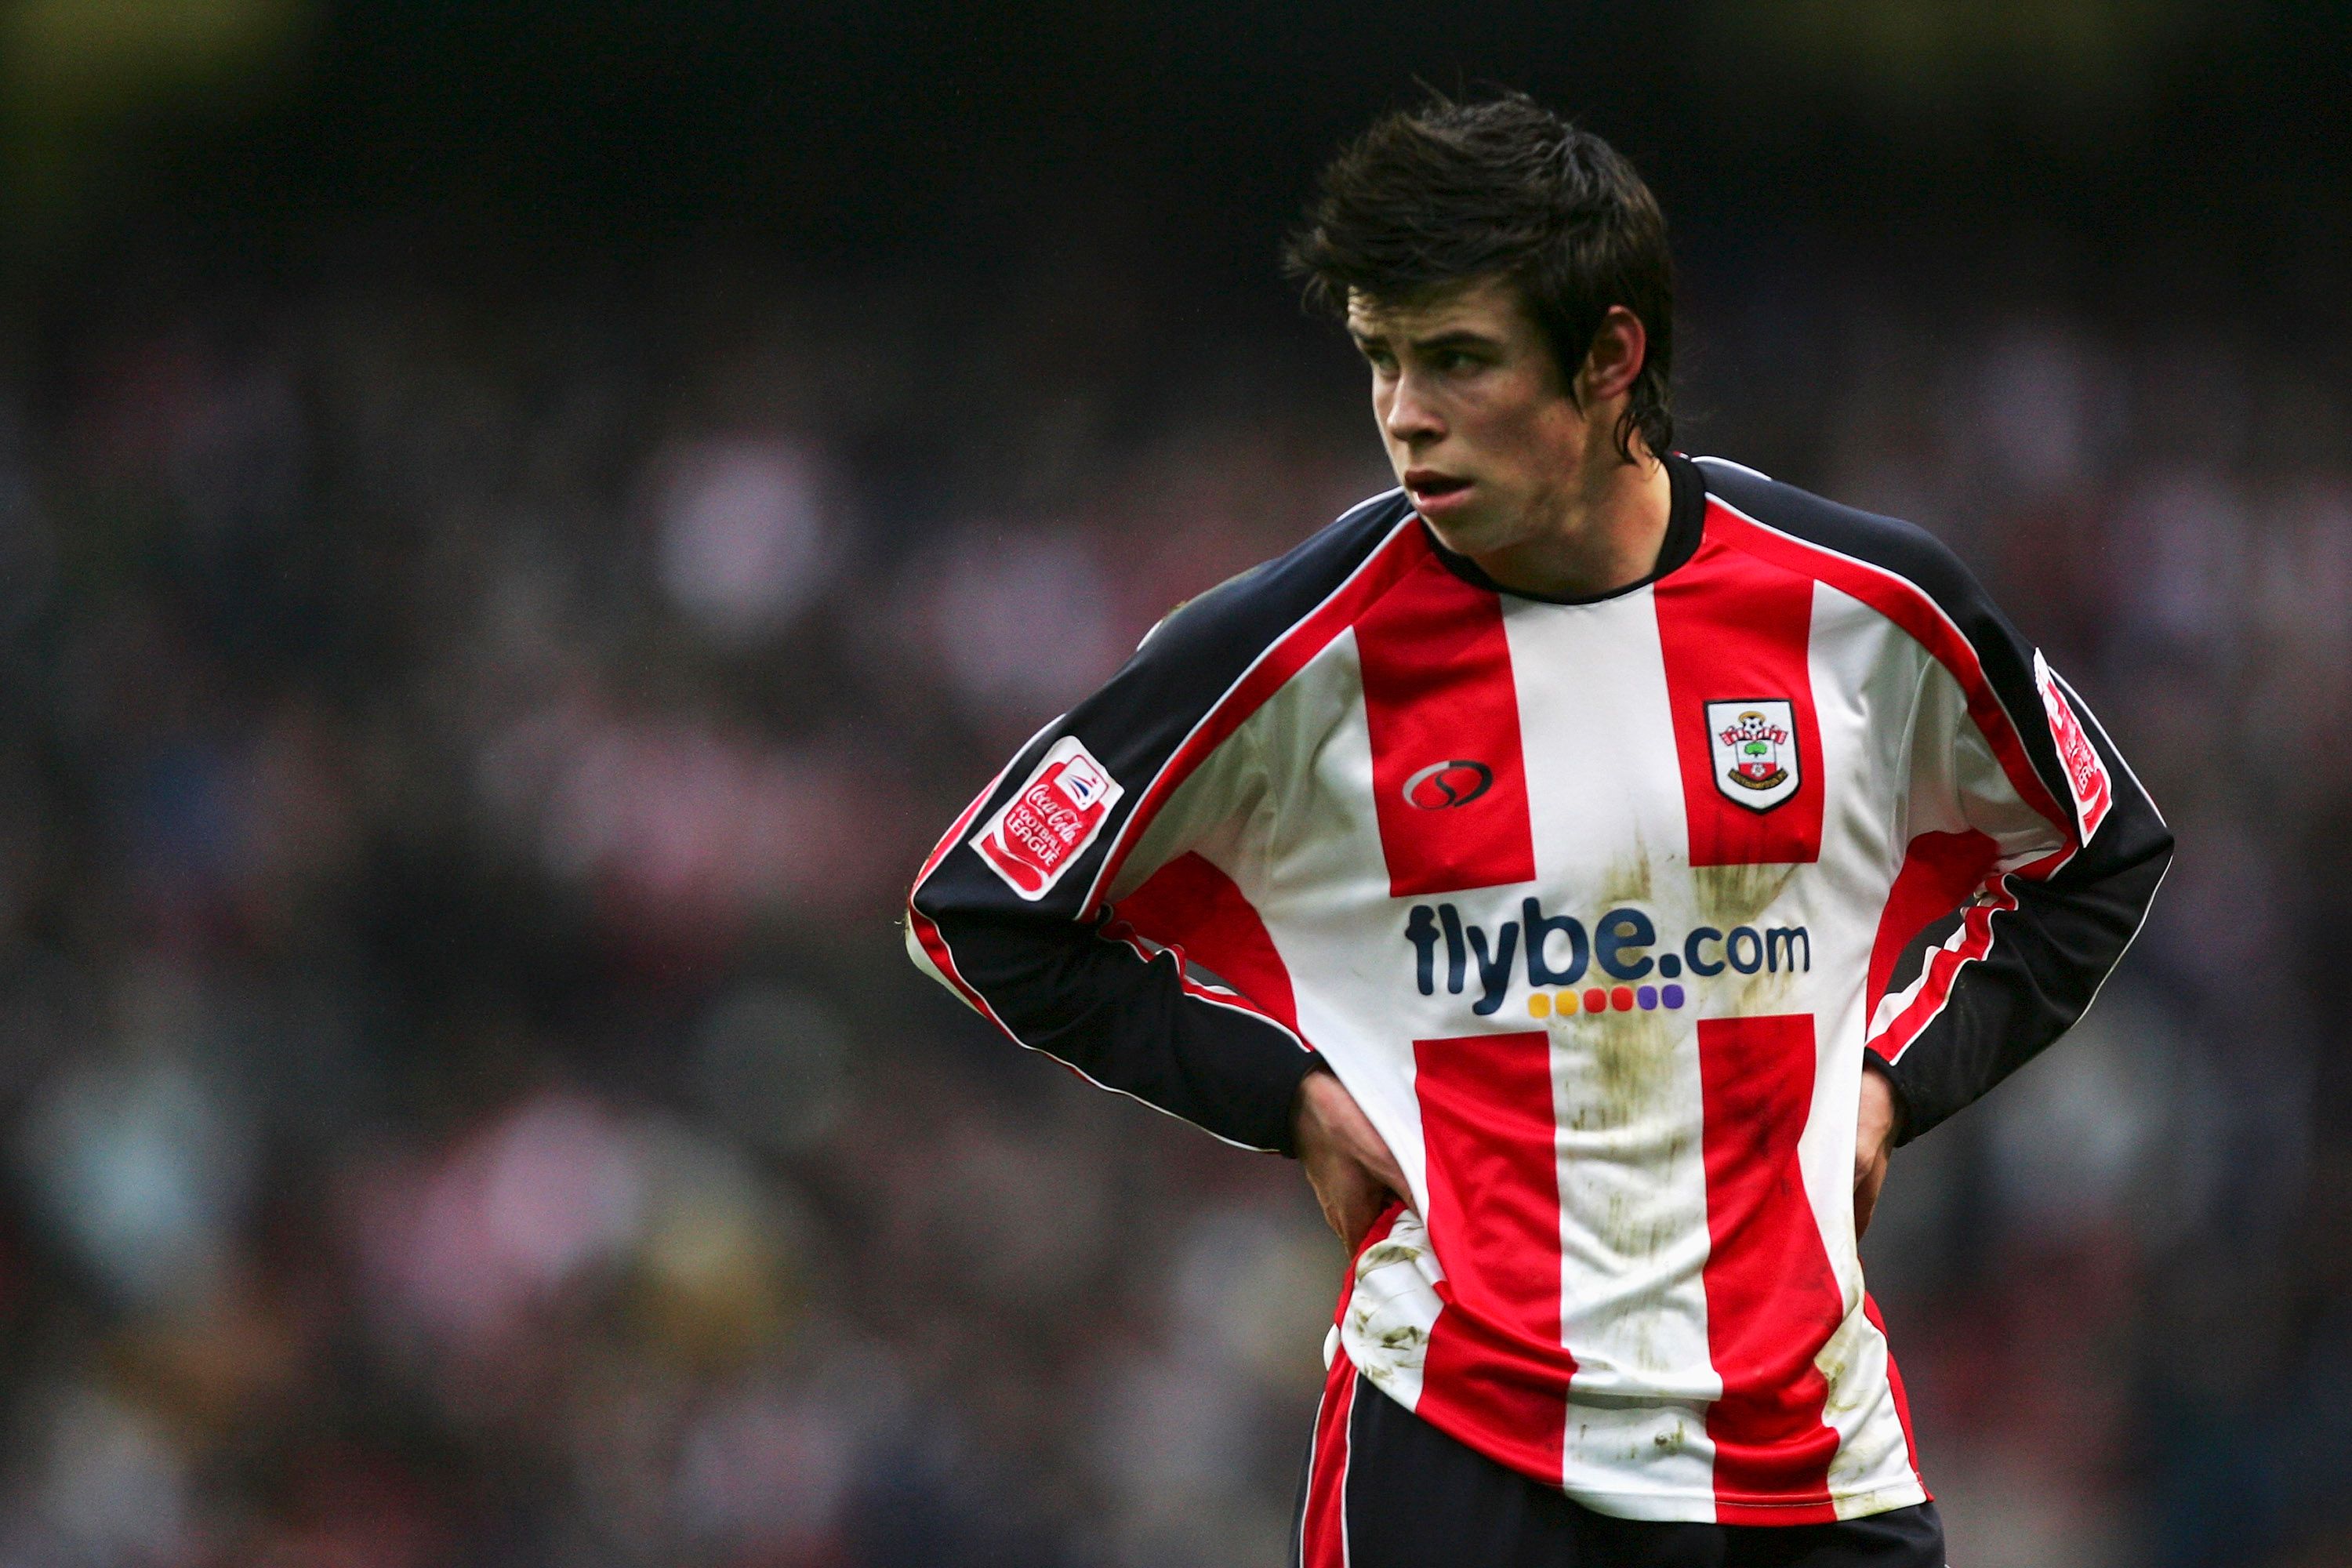 Gareth Bale came through the ranks at Southampton